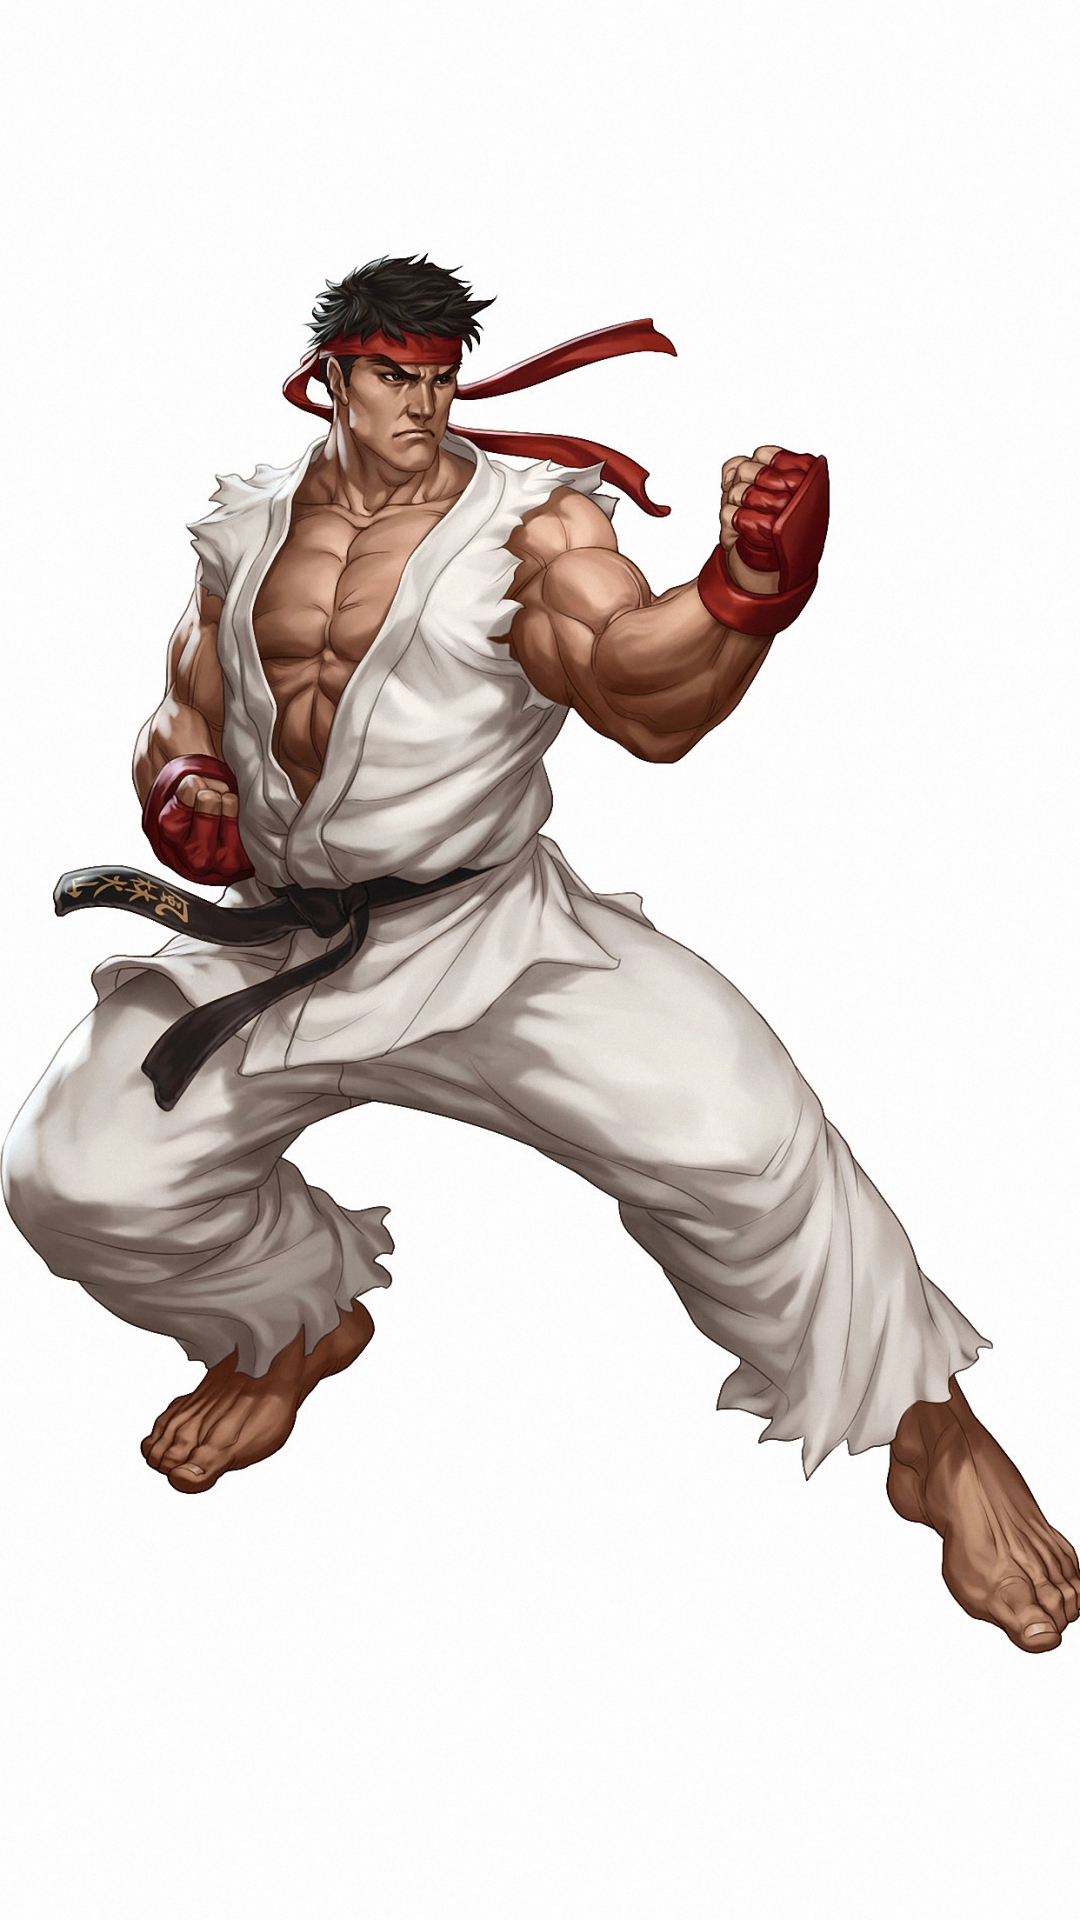 ryu street fighter fond d'écran,kung fu,illustration,kung fu,arts martiaux,personnage fictif